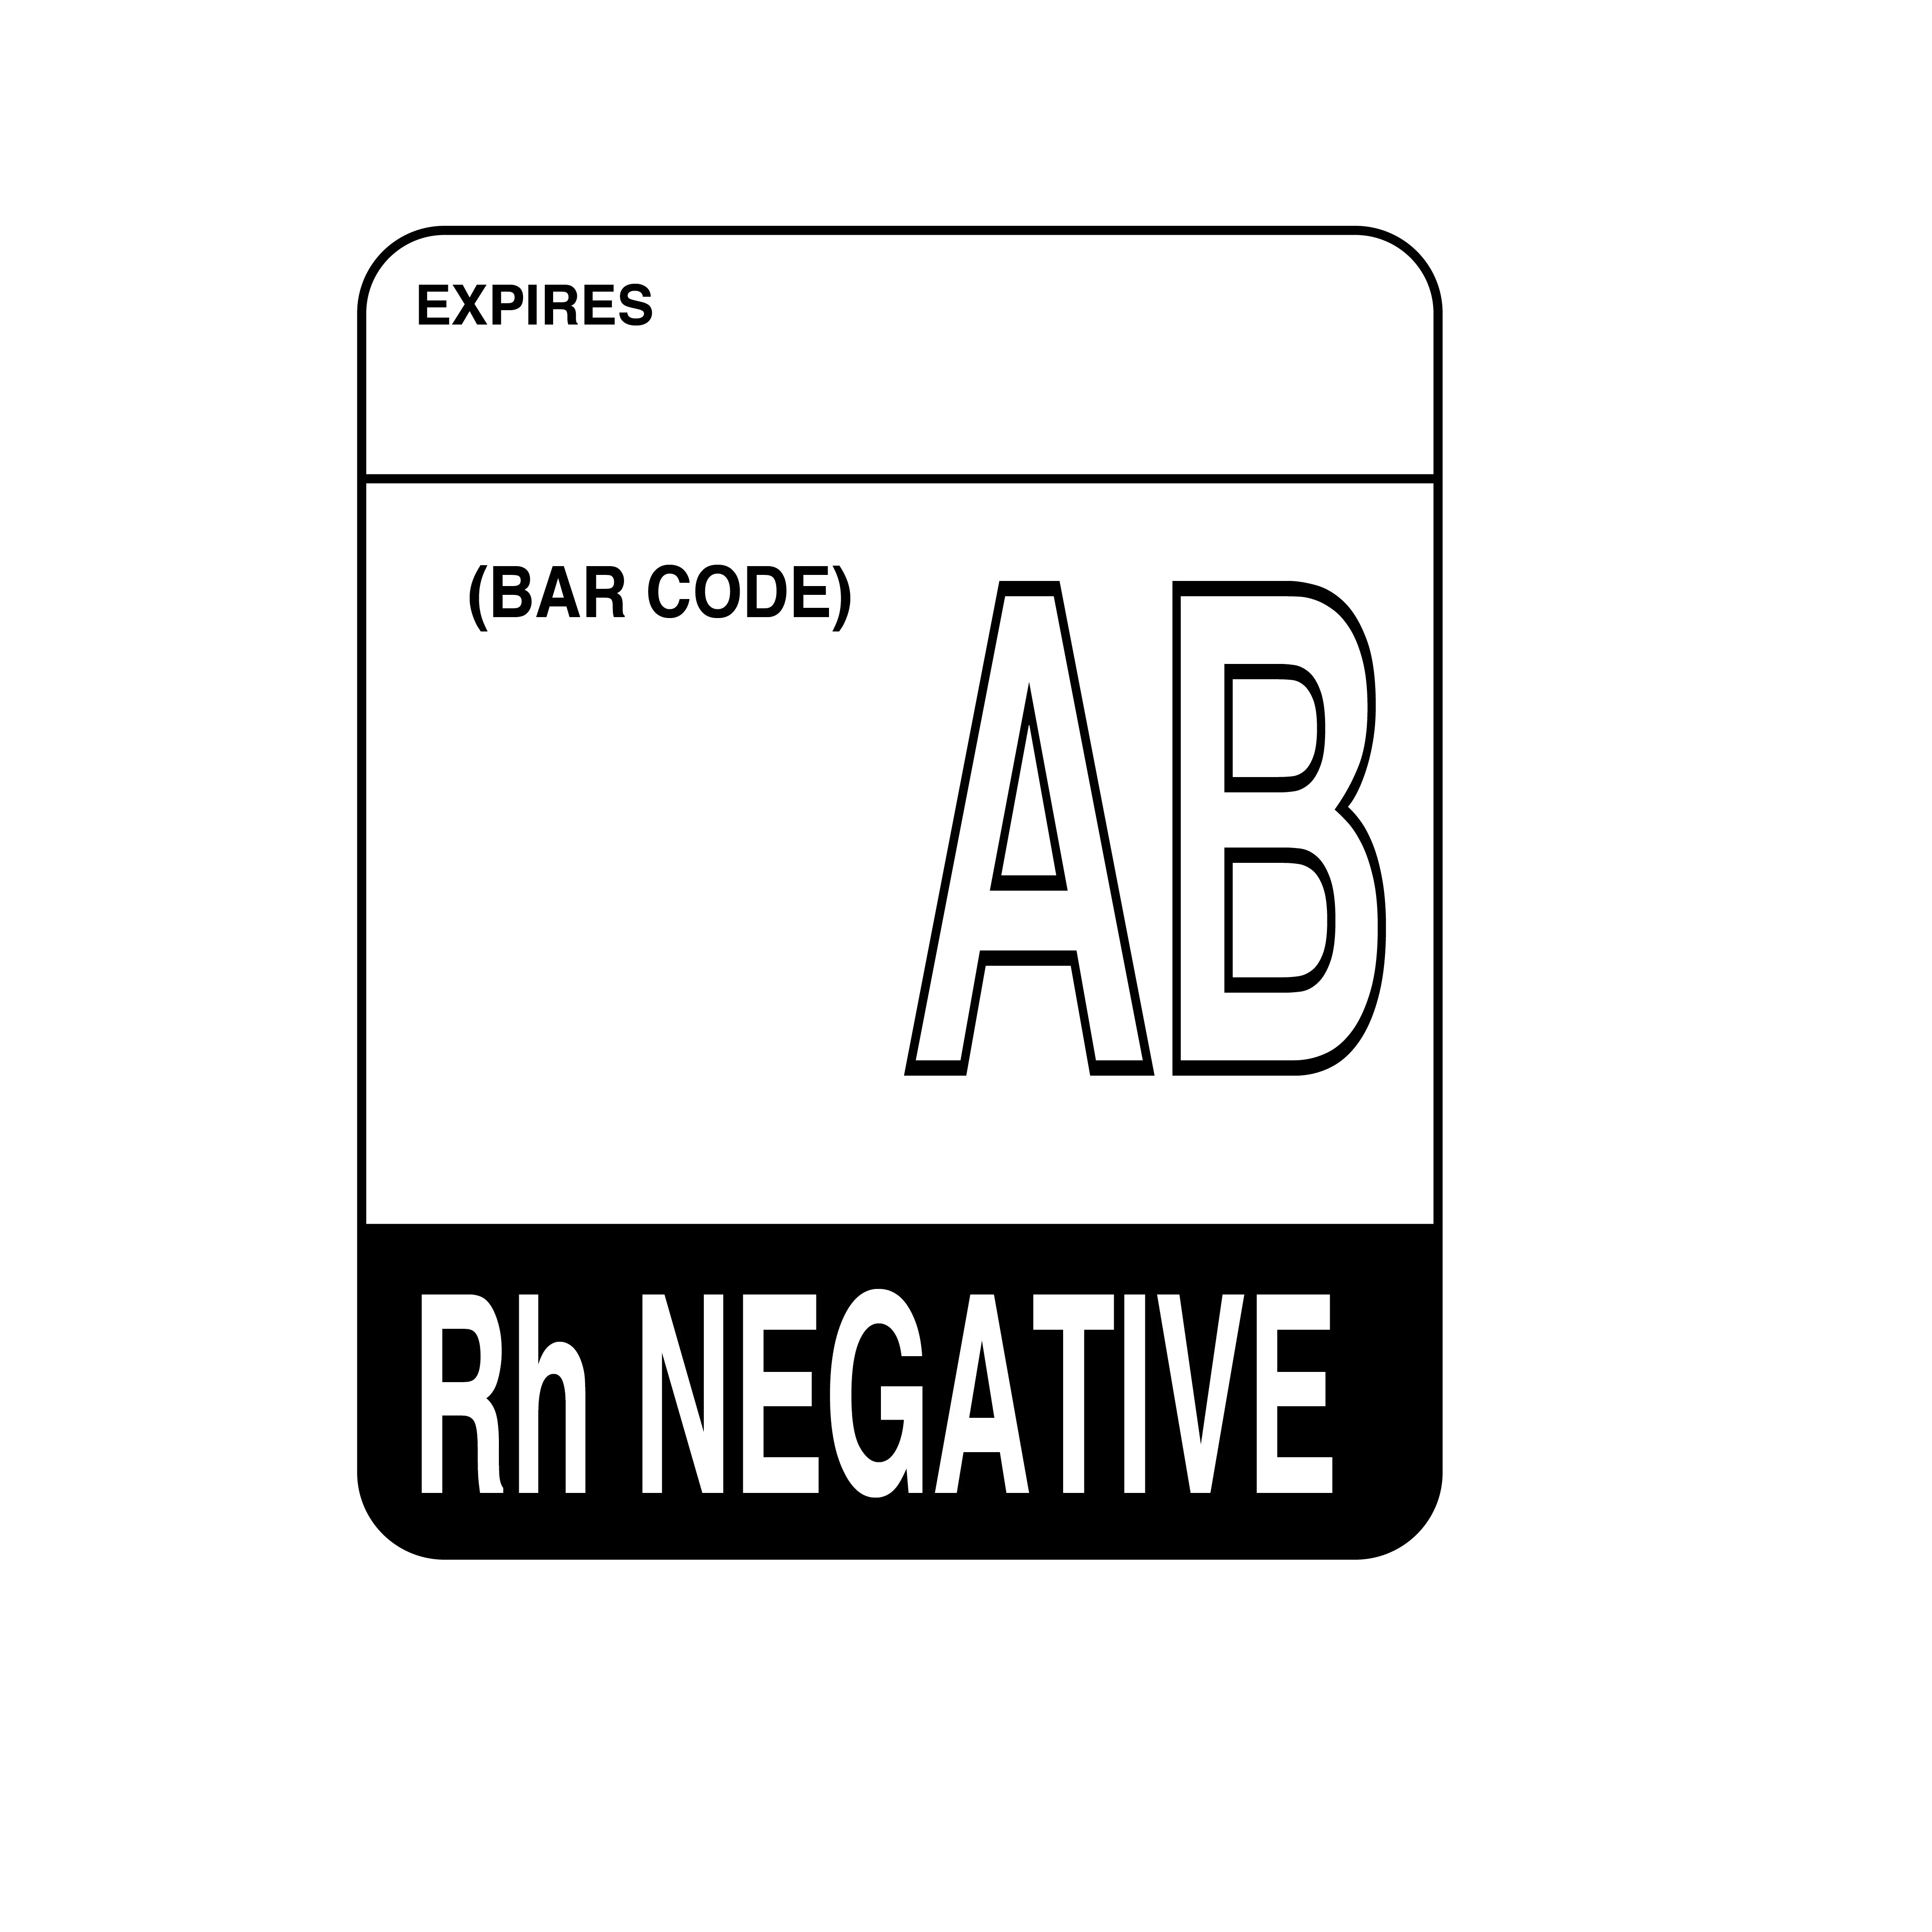 Label, AB Rh Negative